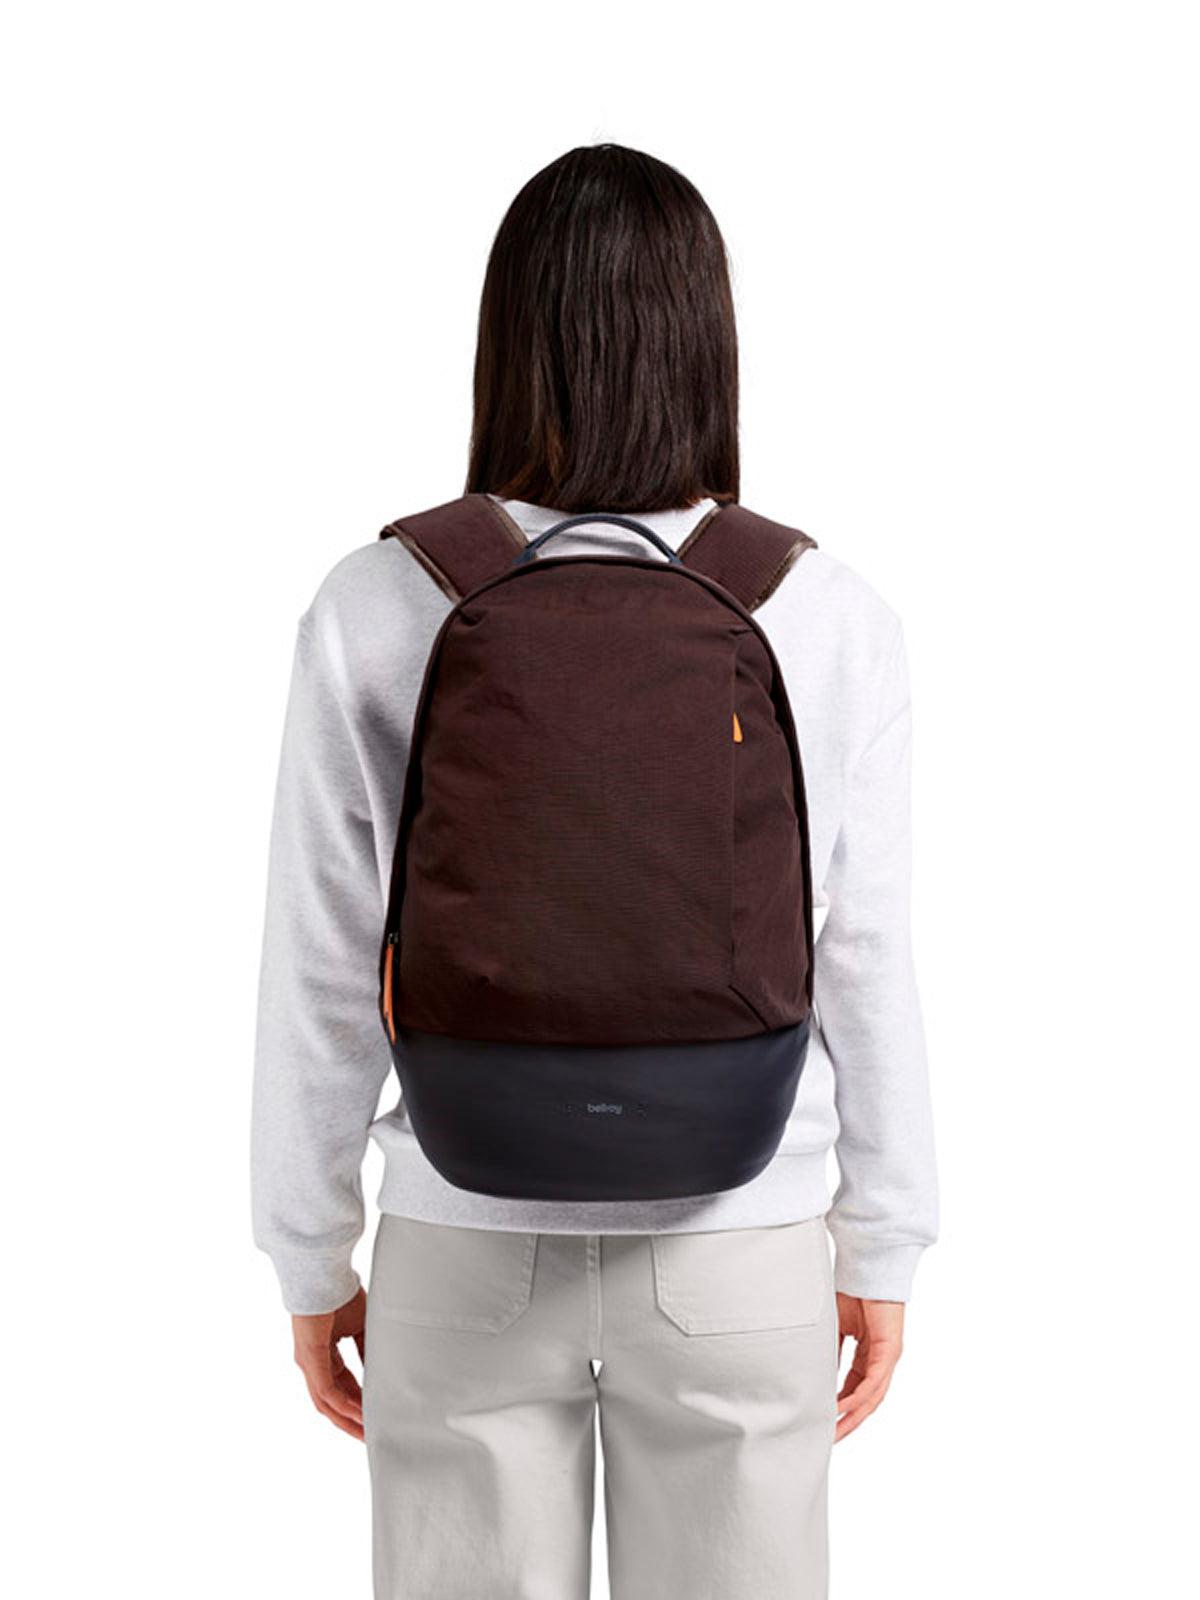 Bellroy Classic Backpack Premium Edition Deep Plum